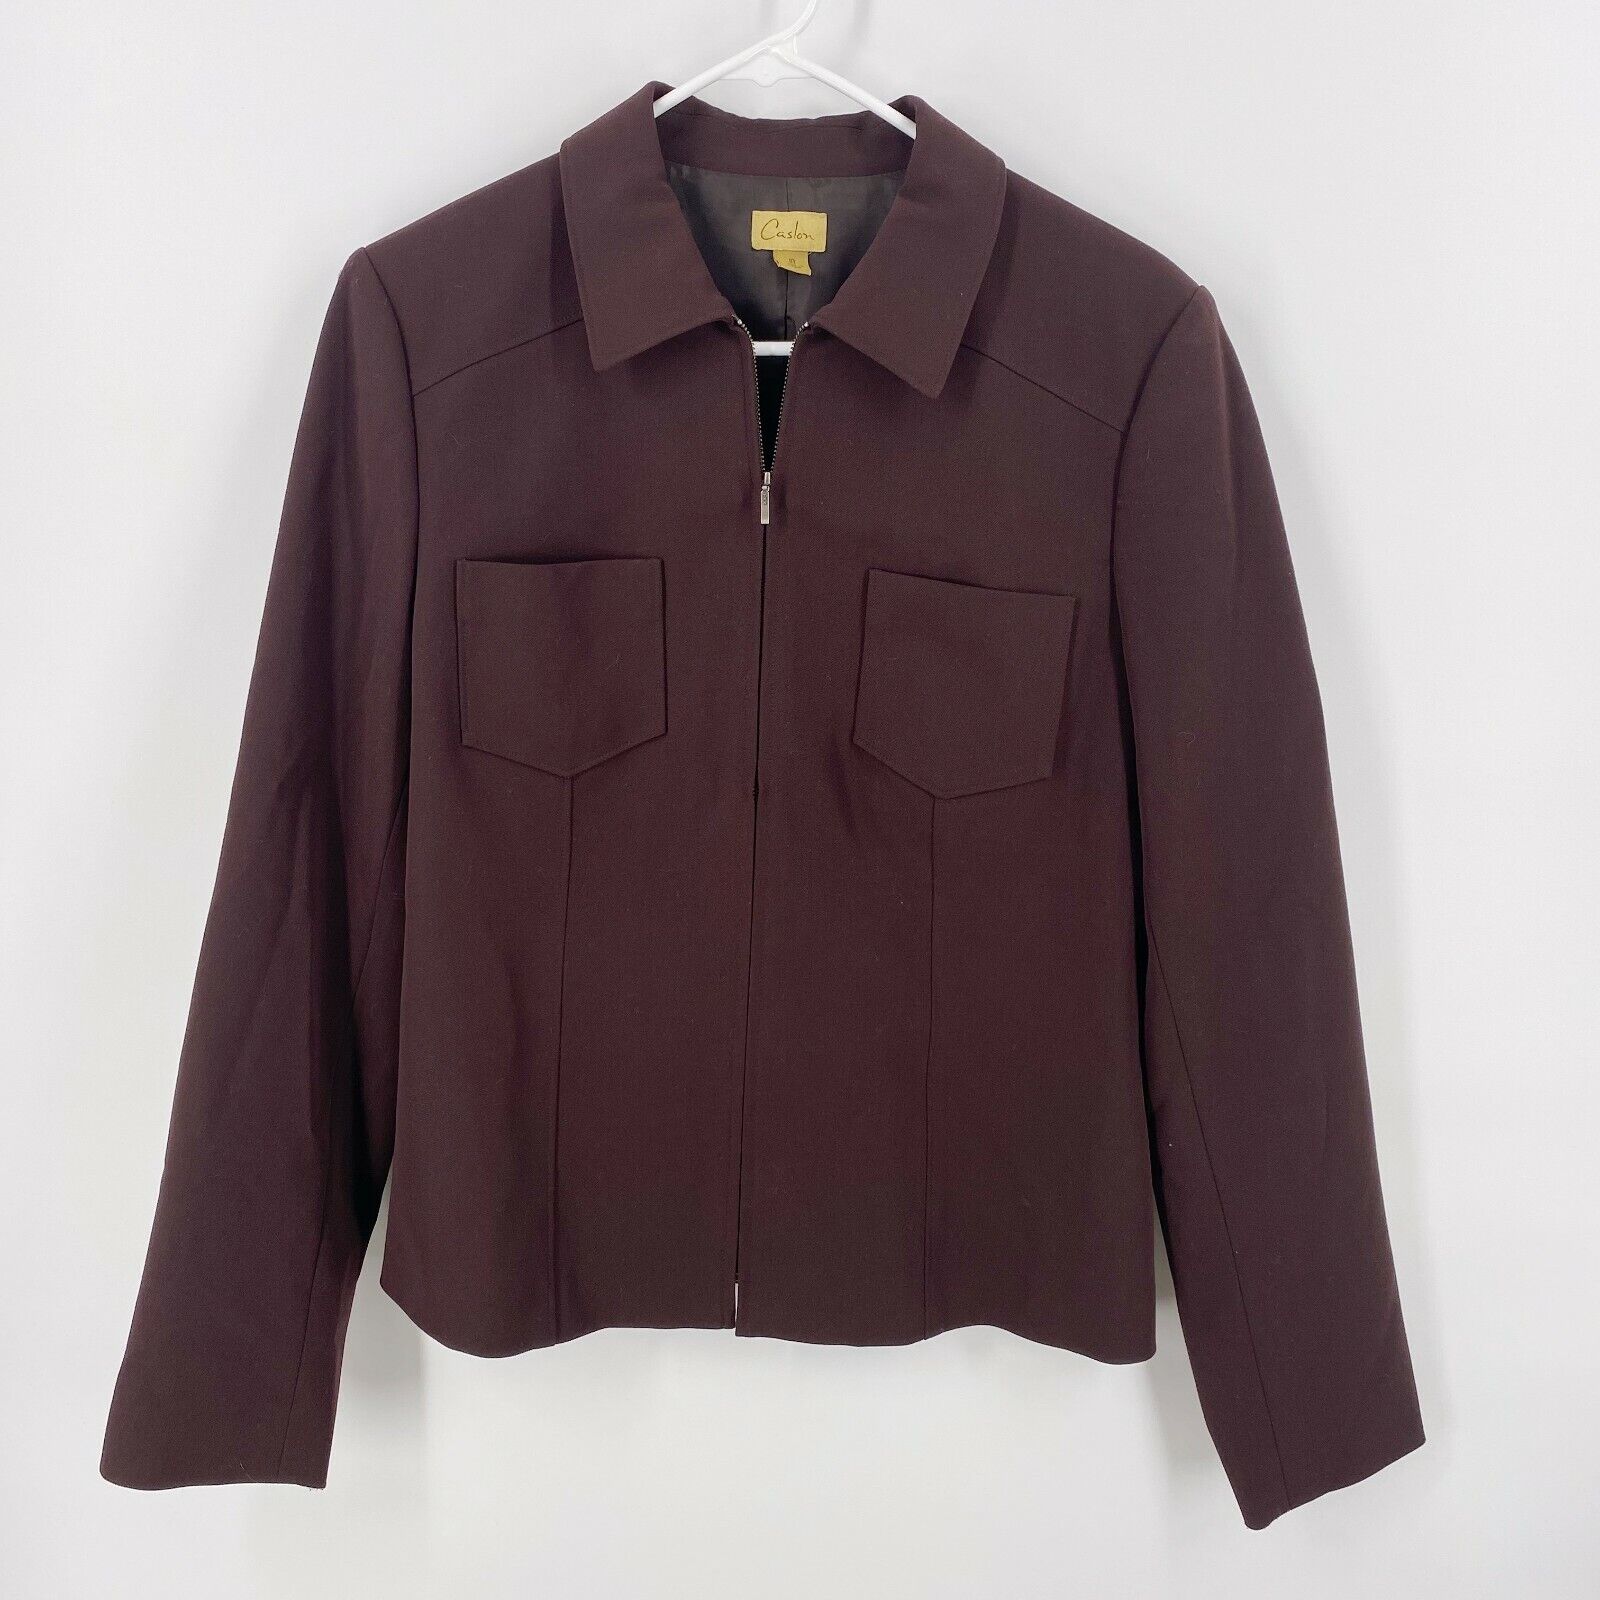 Caslon Brown Full Zip Lined Moto Jacket with Pockets Women's Size 10 | eBay